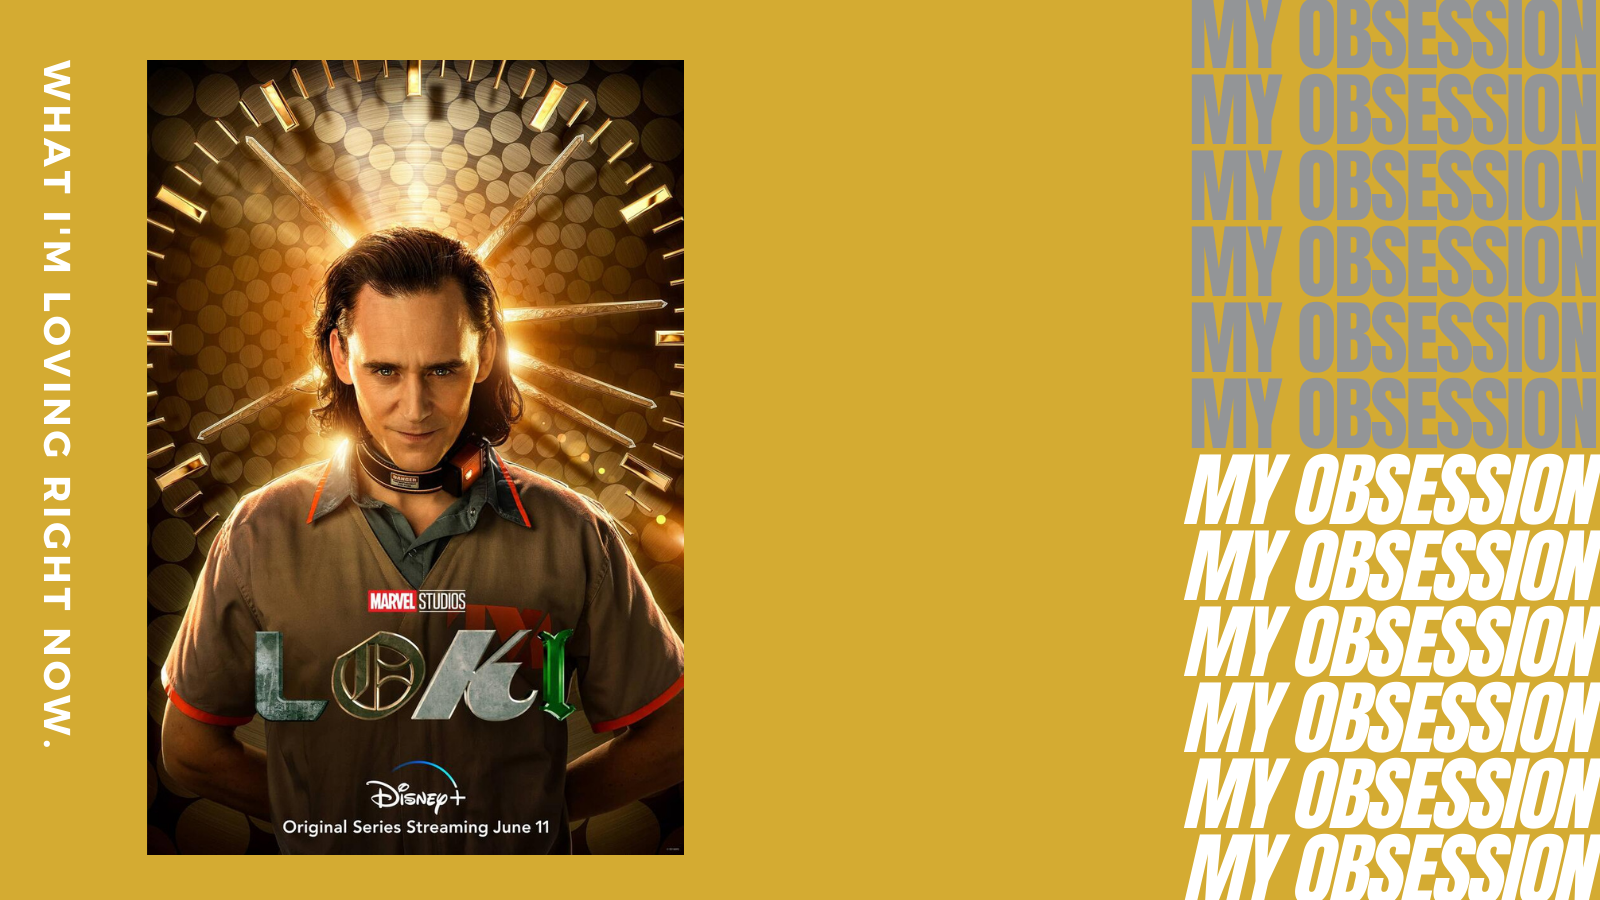 Loki TV series promotional image